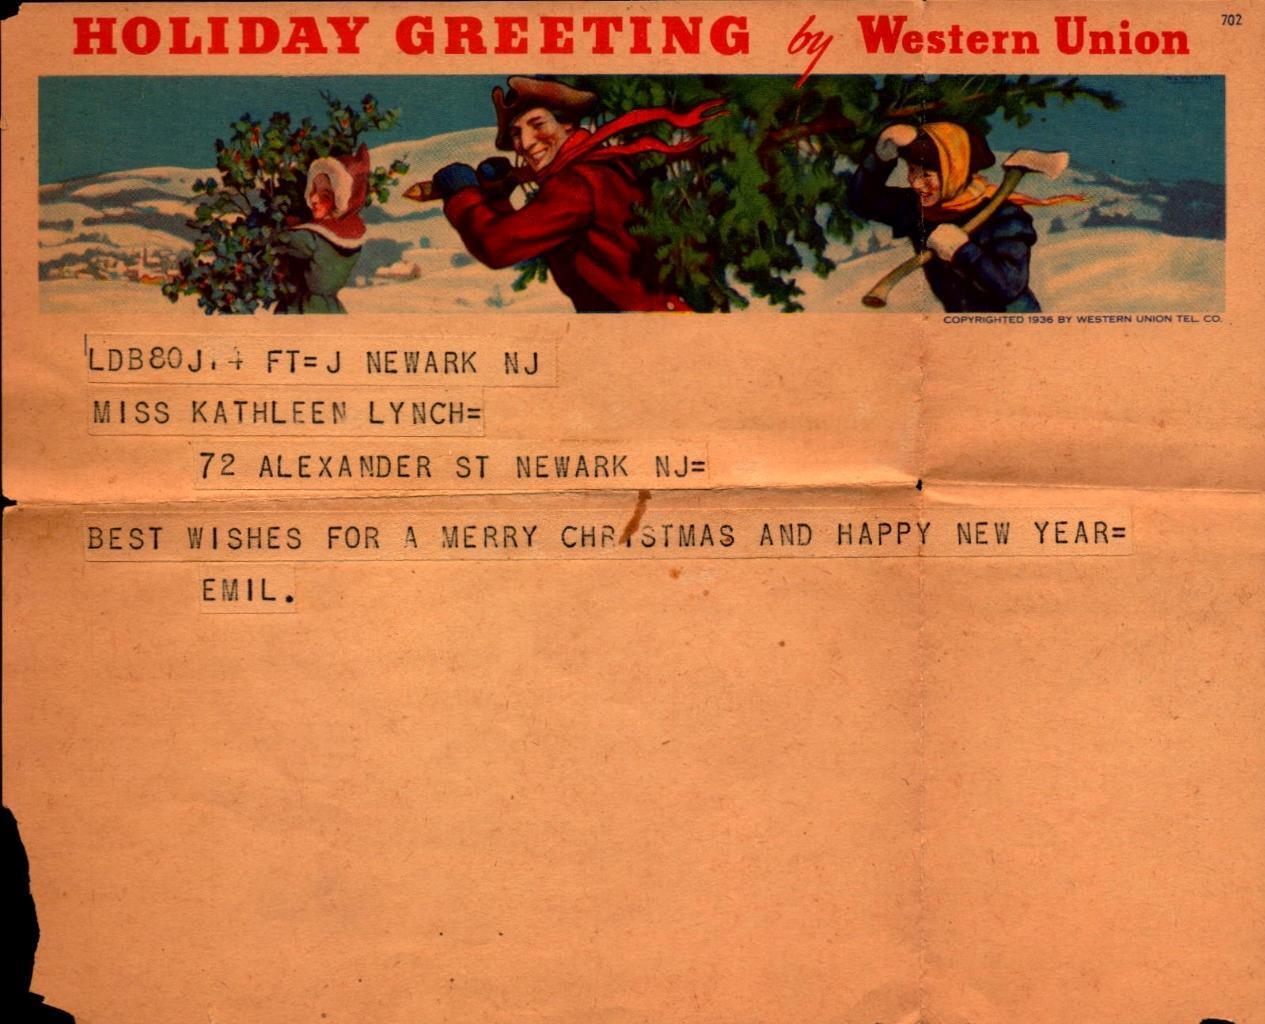 1936 WESTERN UNION CHRISTMAS TELEGRAM - HOLIDAY GREETING BY WESTERN UNION BK59